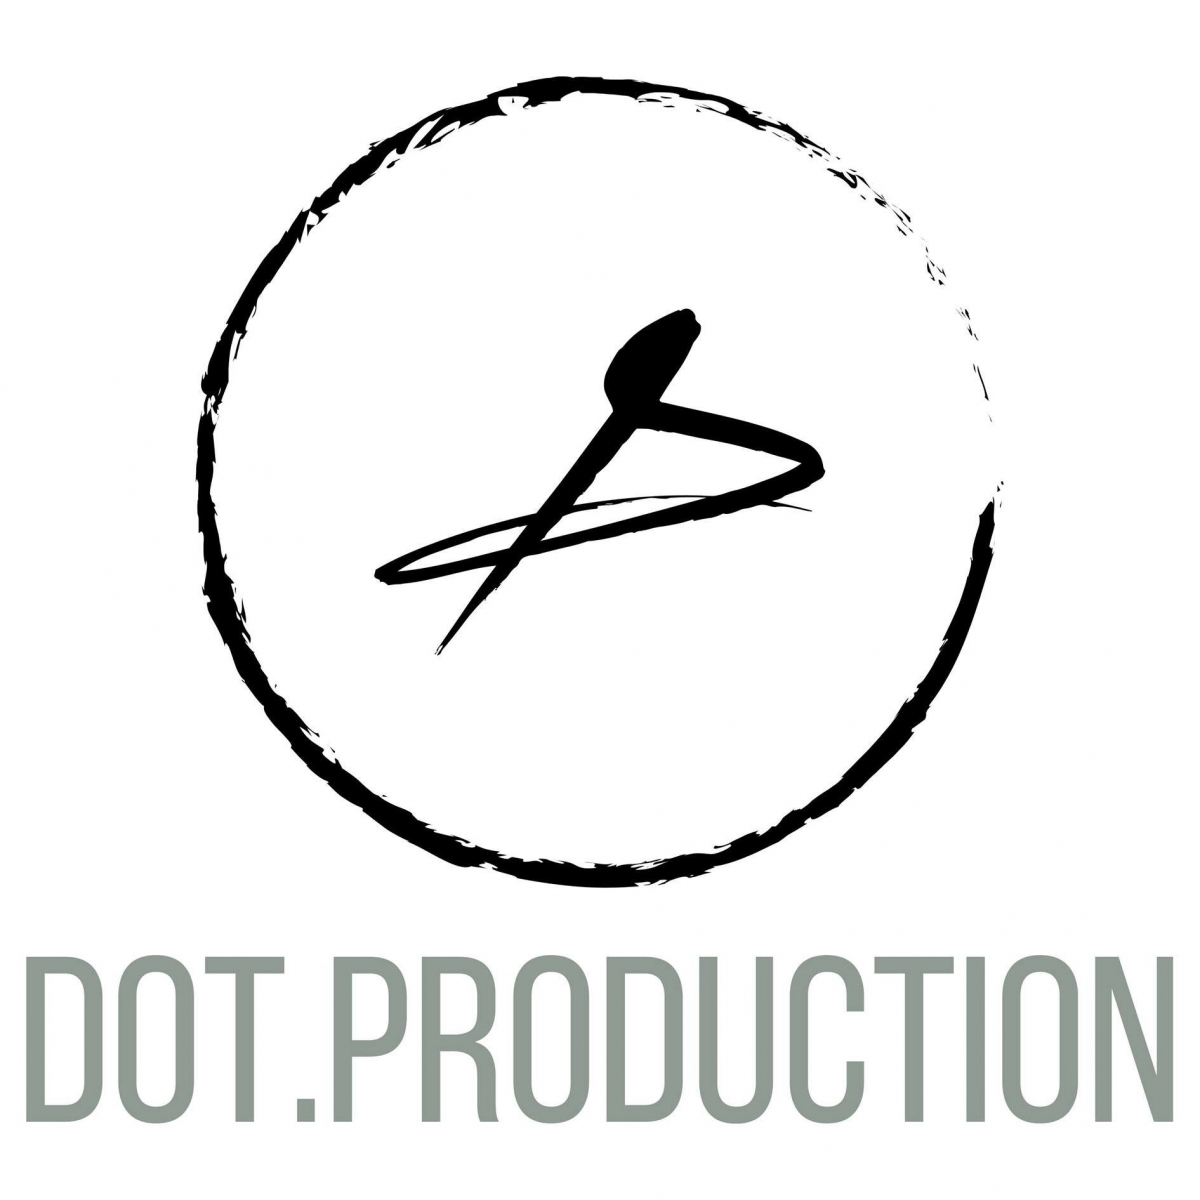 DoT. production